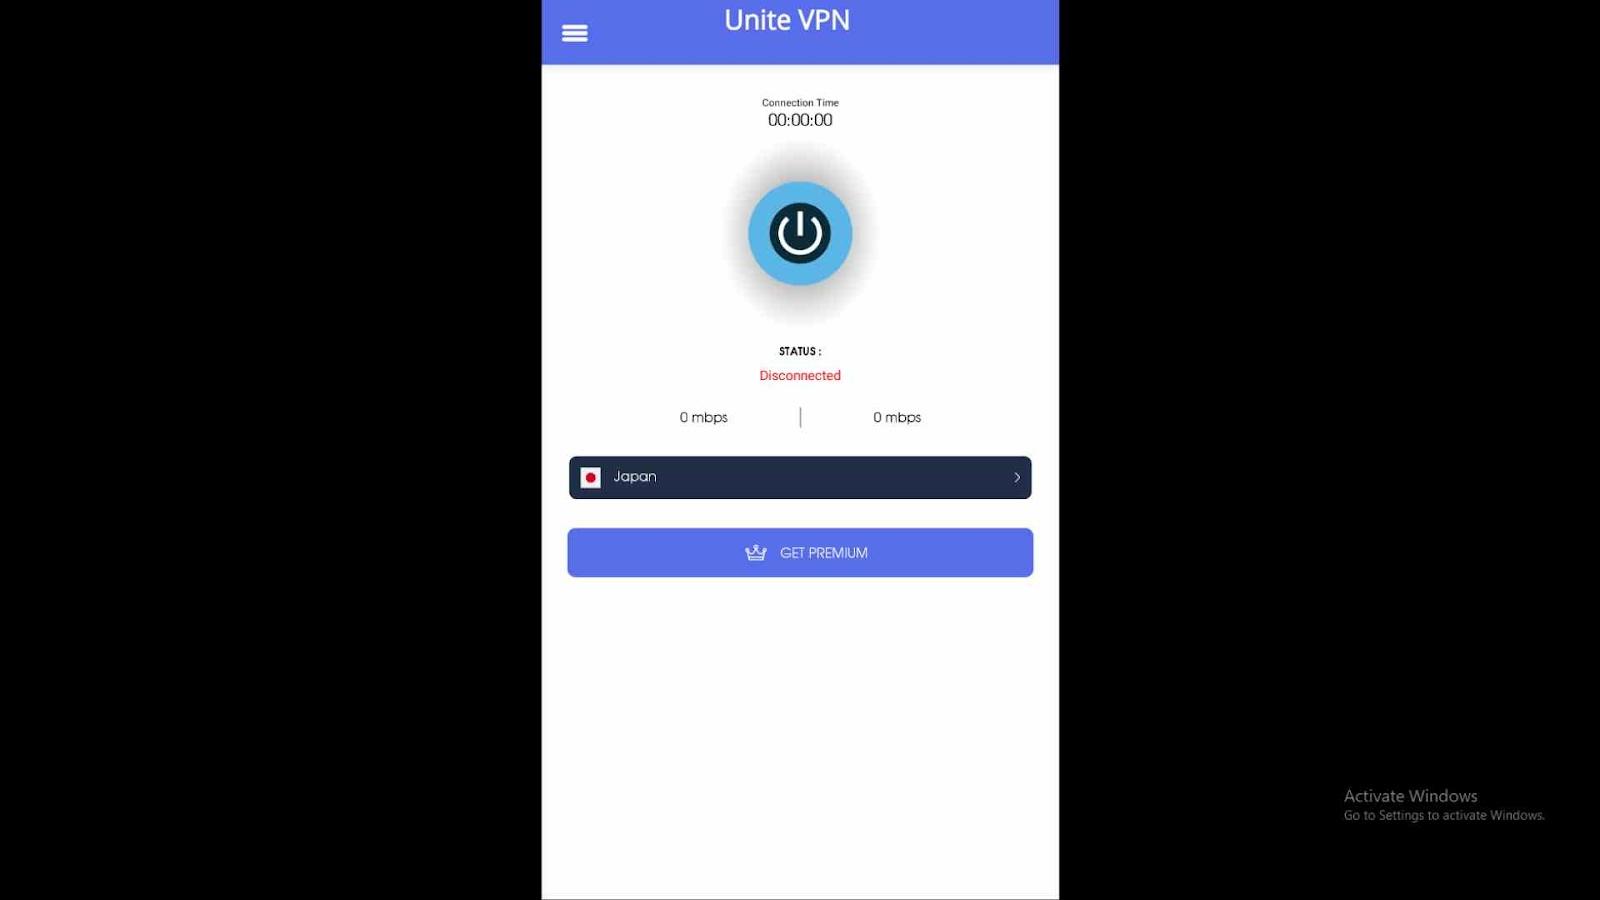 What is Unite VPN?